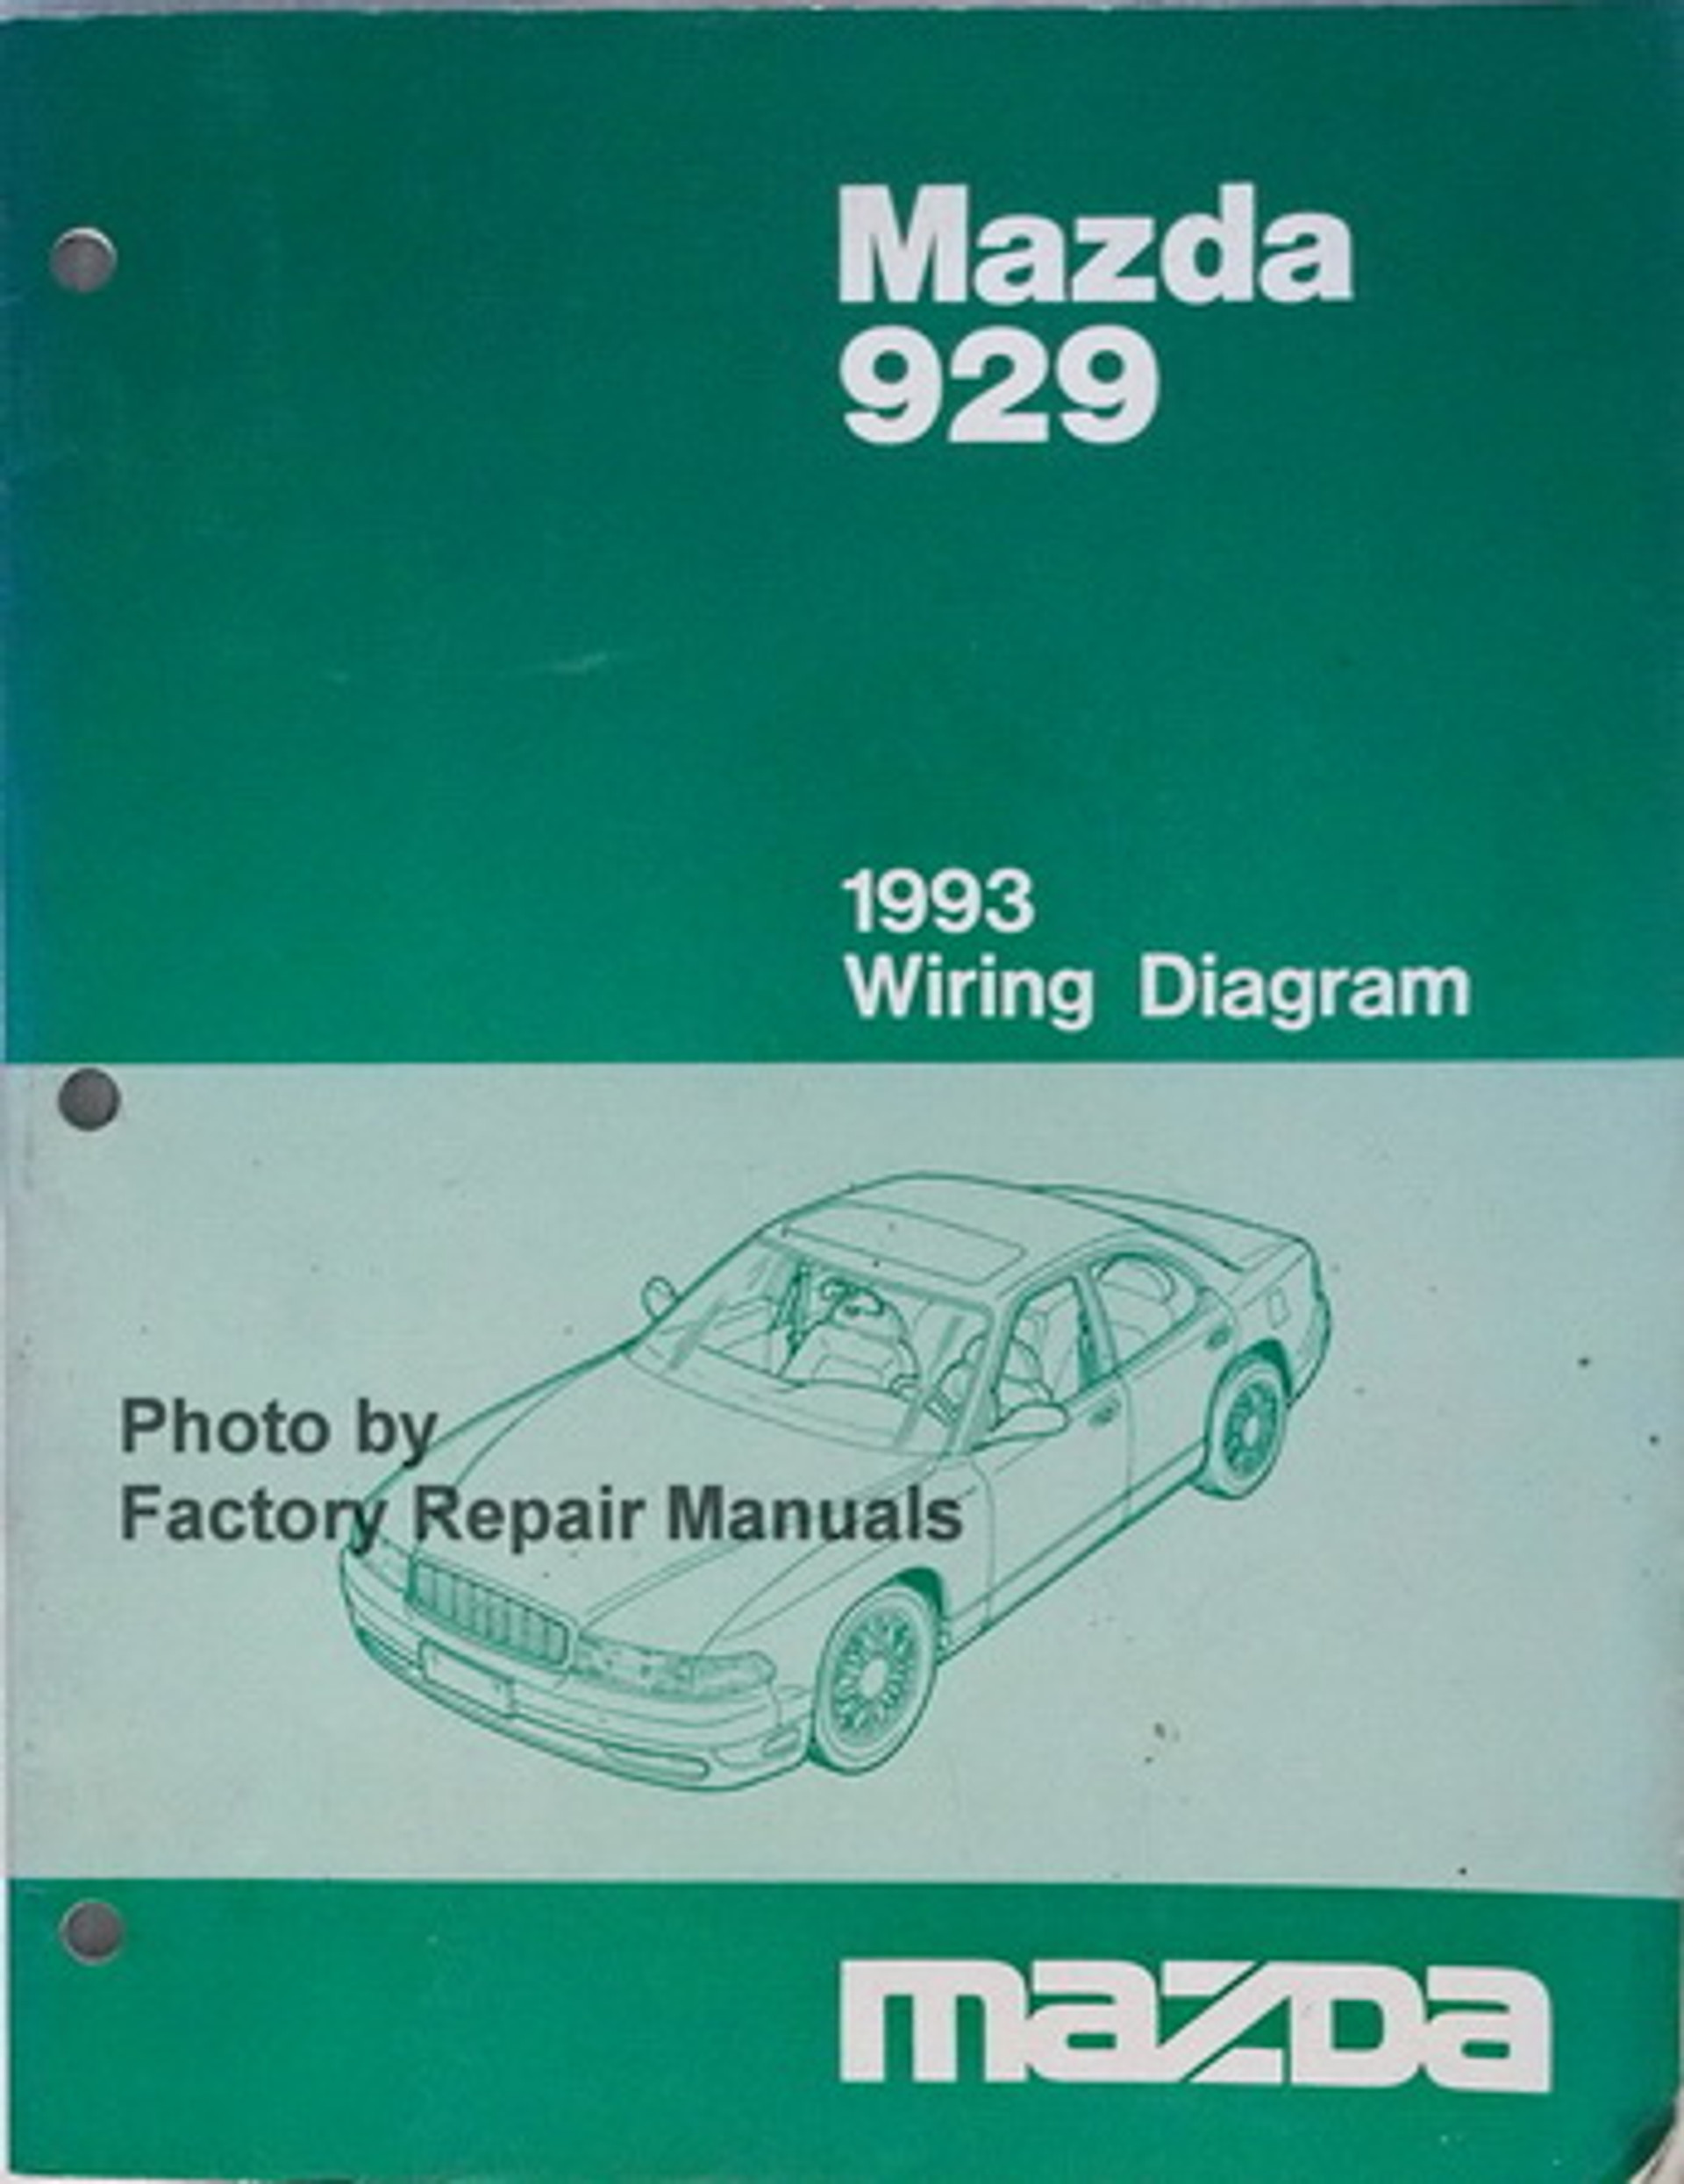 Mazda Service Manuals Original Shop Books | Factory Repair Manuals